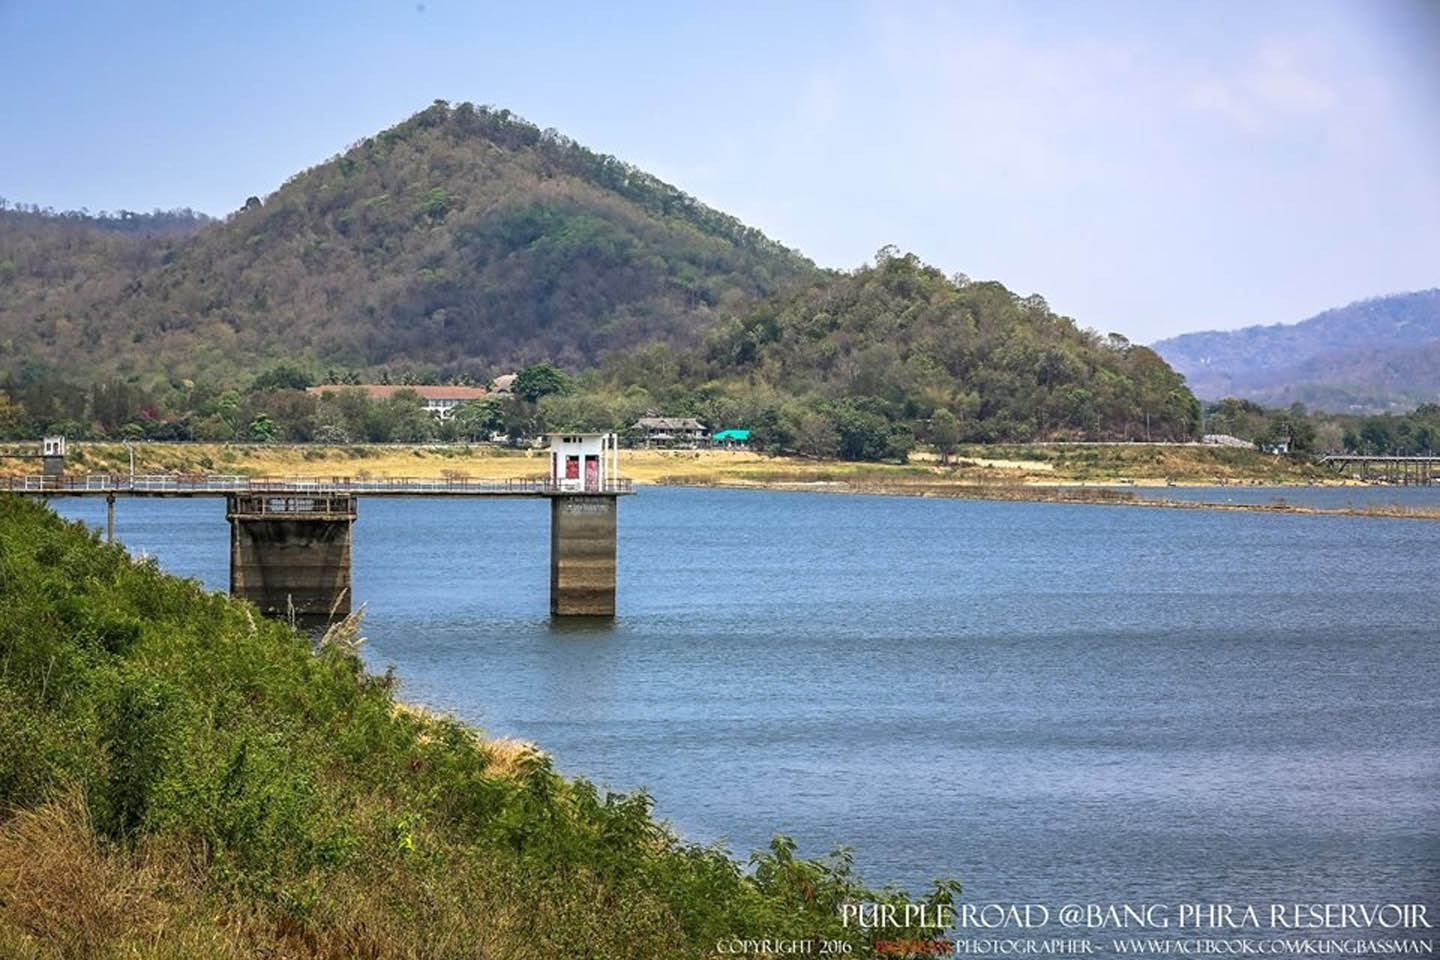 Bangphra reservoir